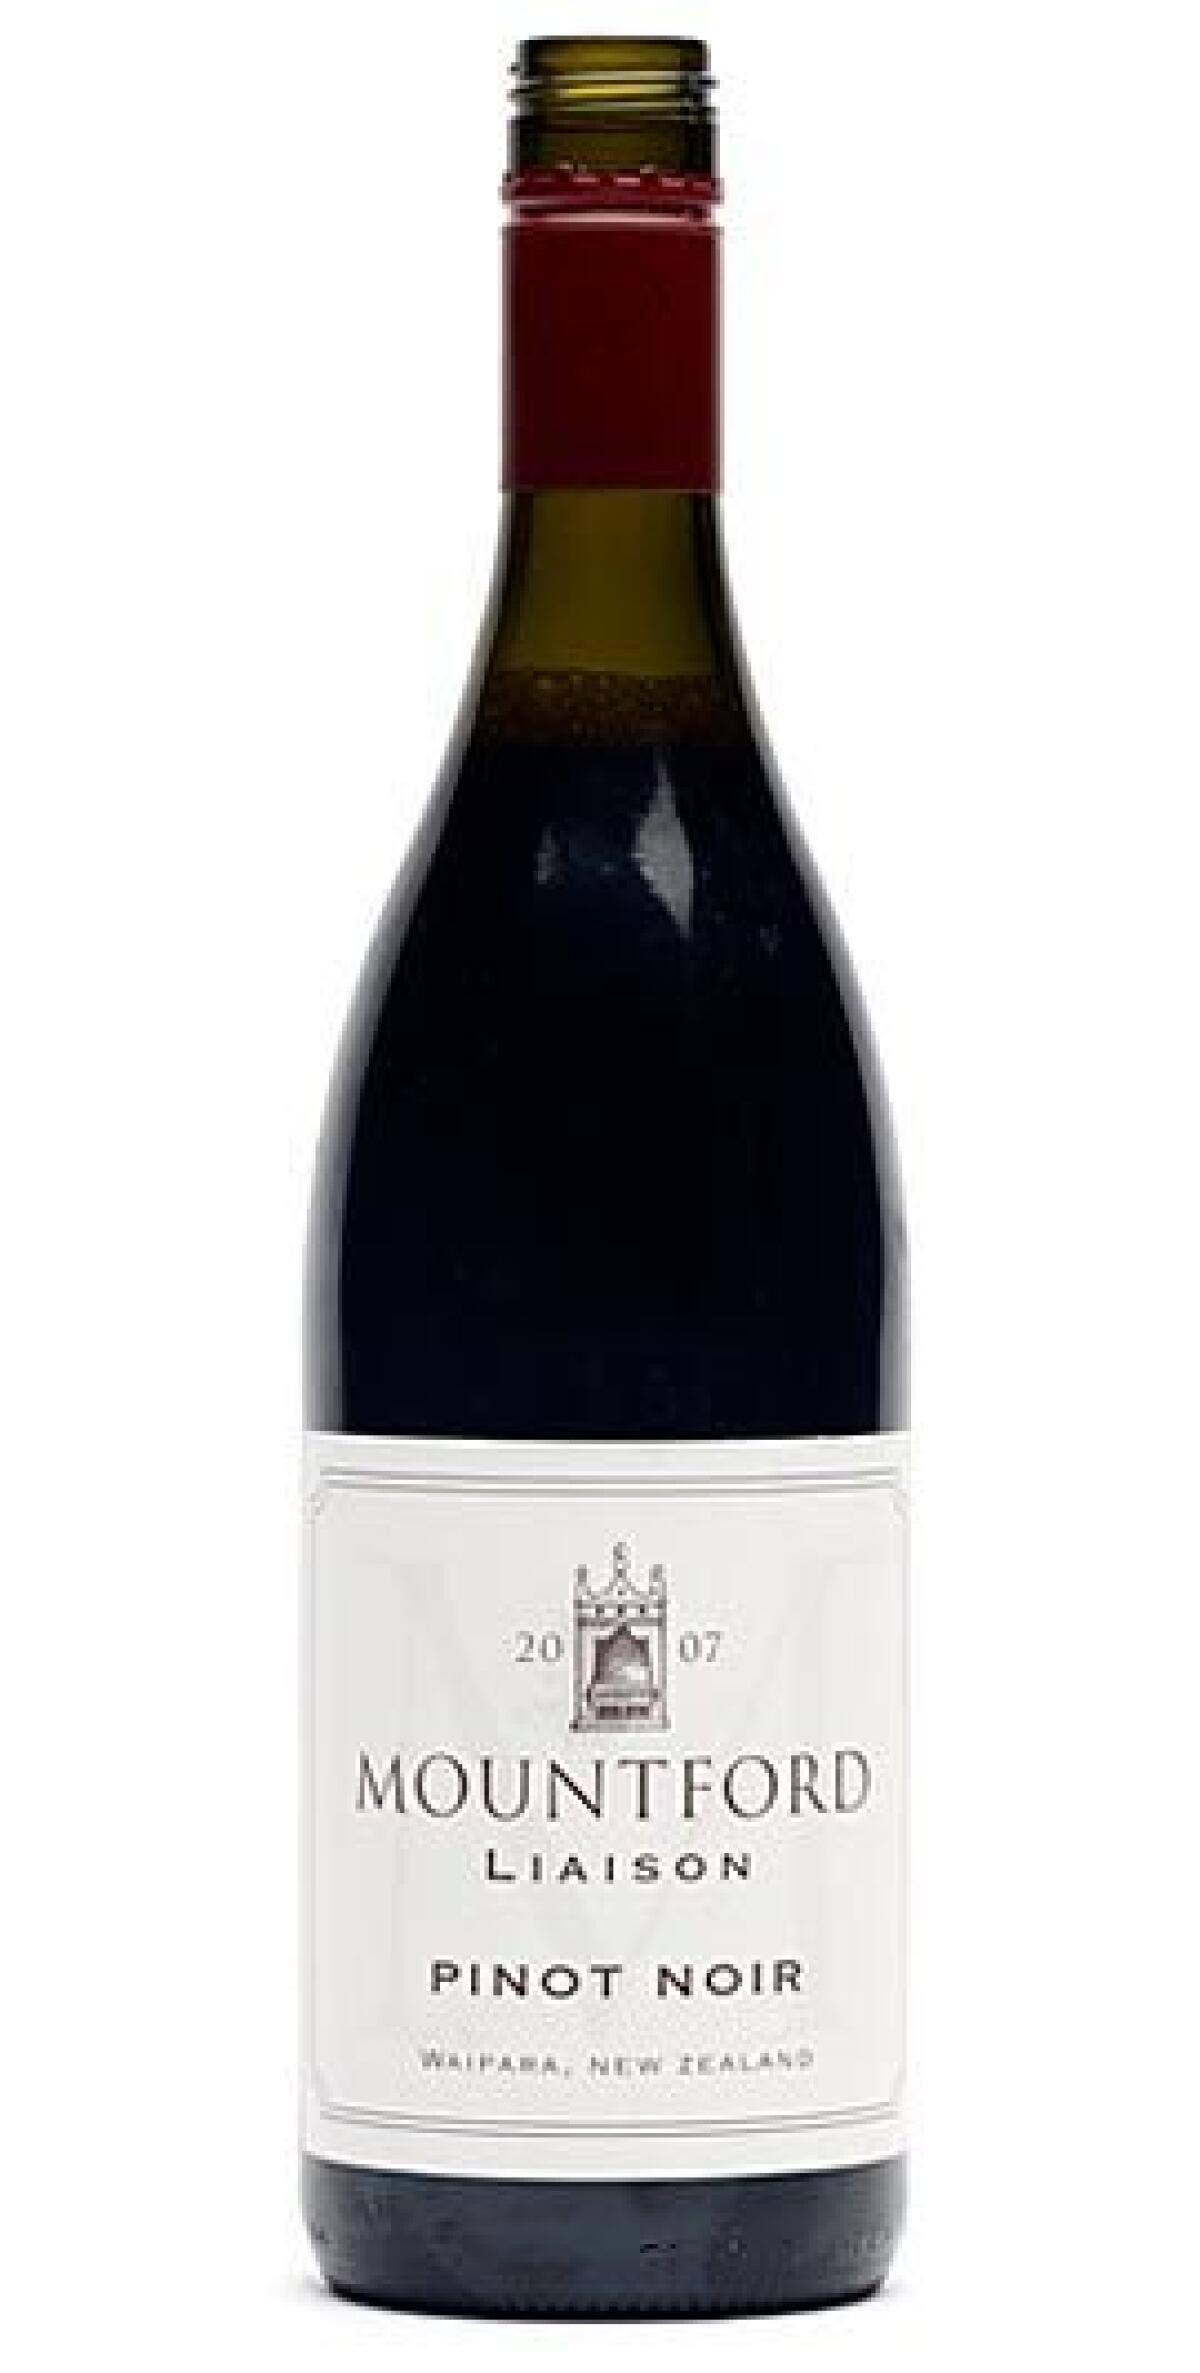 2007 Mountford 'Liaison' Pinot Noir